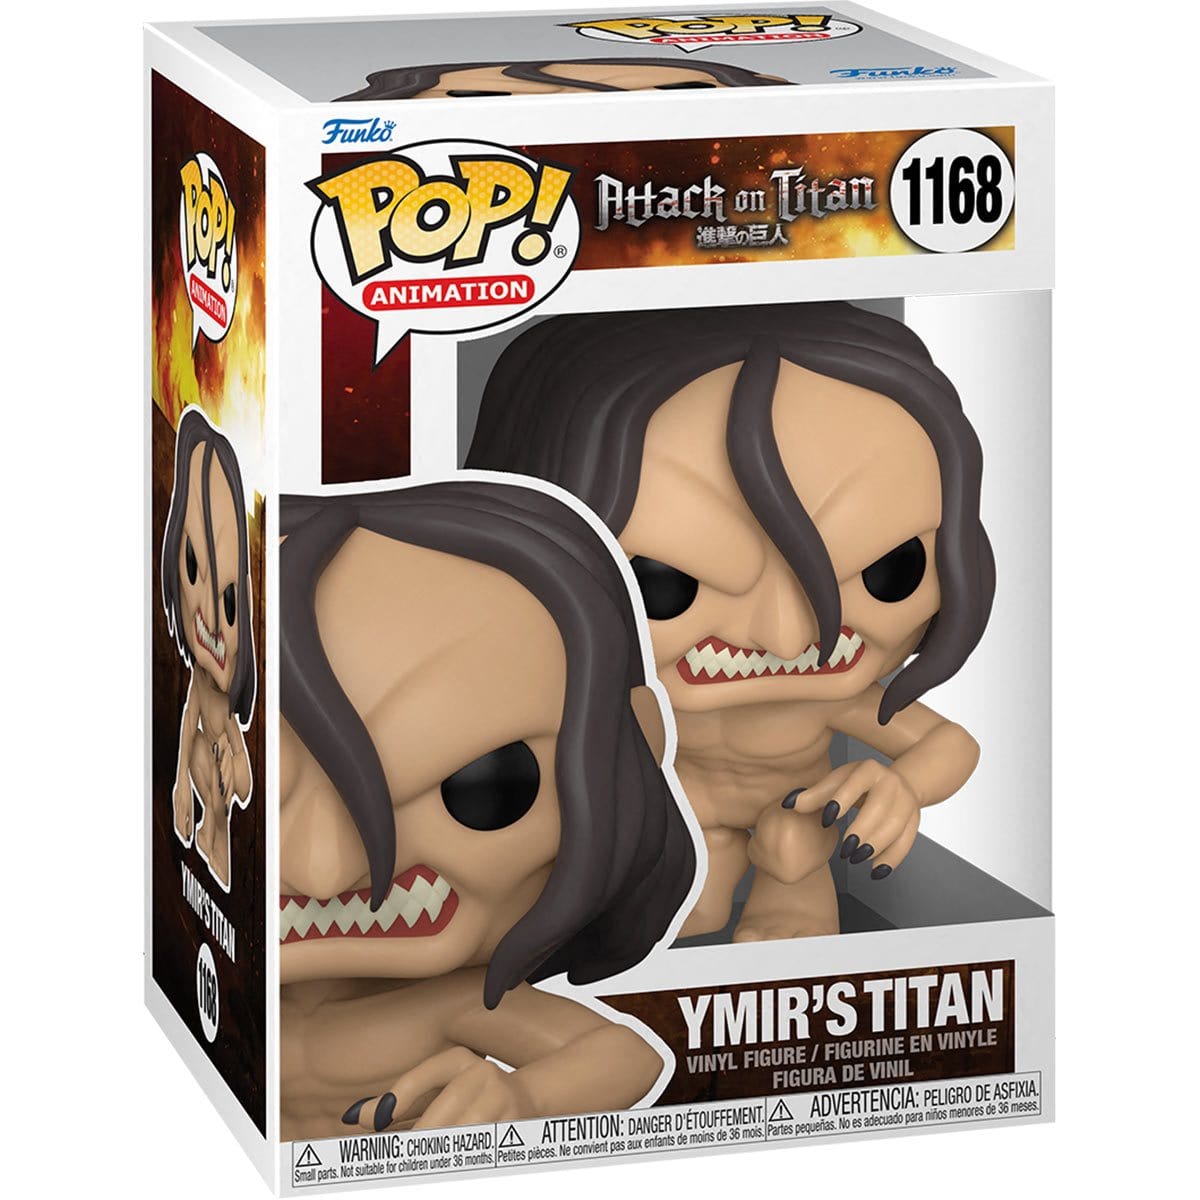 Funko Pop! Attack on Titan Ymir's Titan #1168 Pop-O-Loco